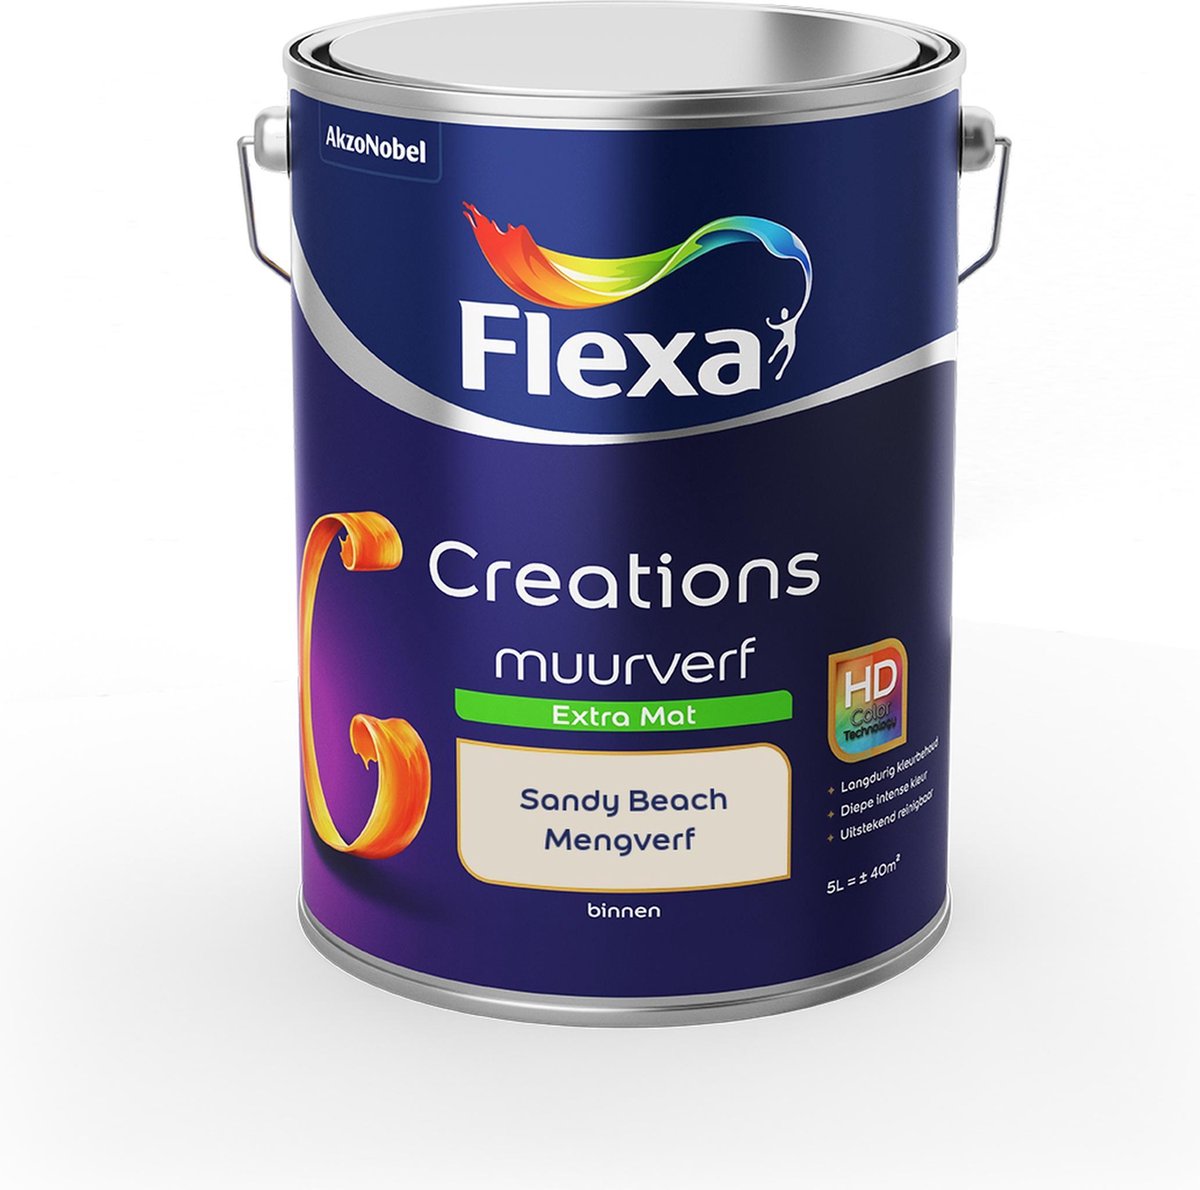 Flexa Creations Muurverf Extra Mat - Sandy Beach - Mengkleuren Collectie - 5 Liter